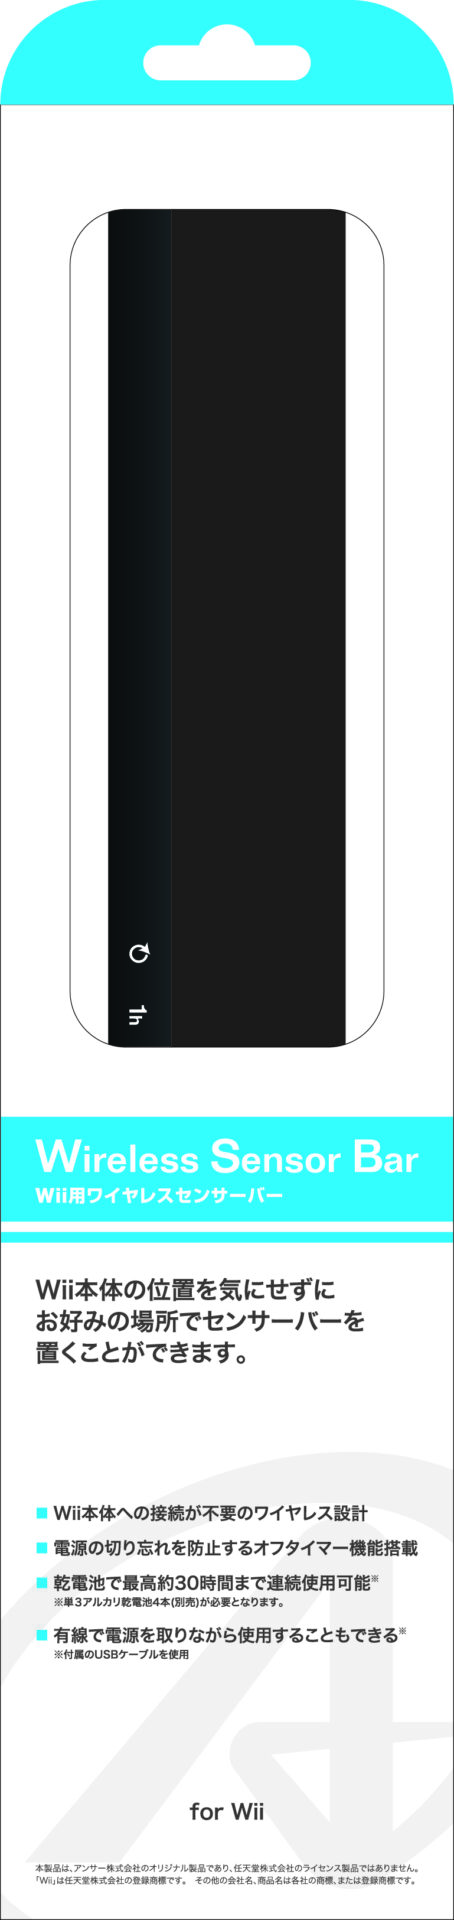 Wii用 ワイヤレスセンサーバー